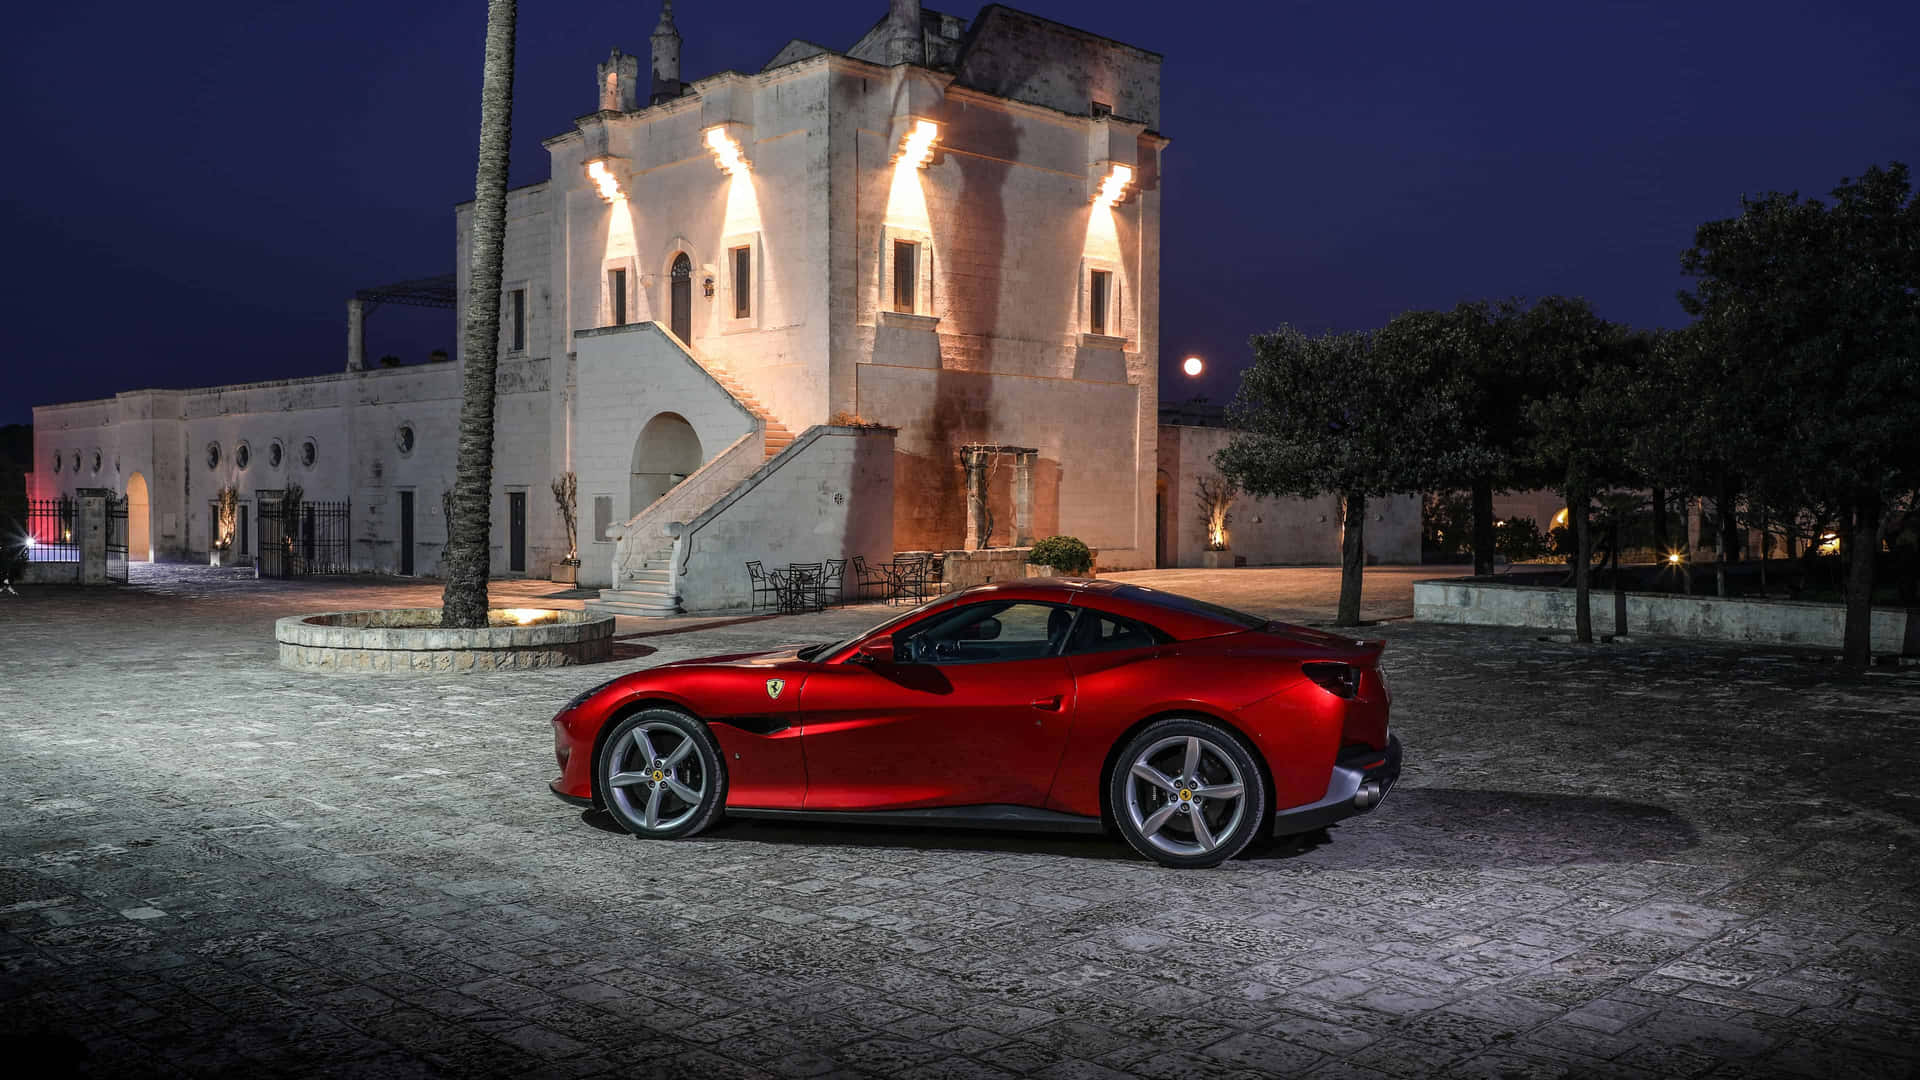 Ferrari F12 California - A New Sports Car